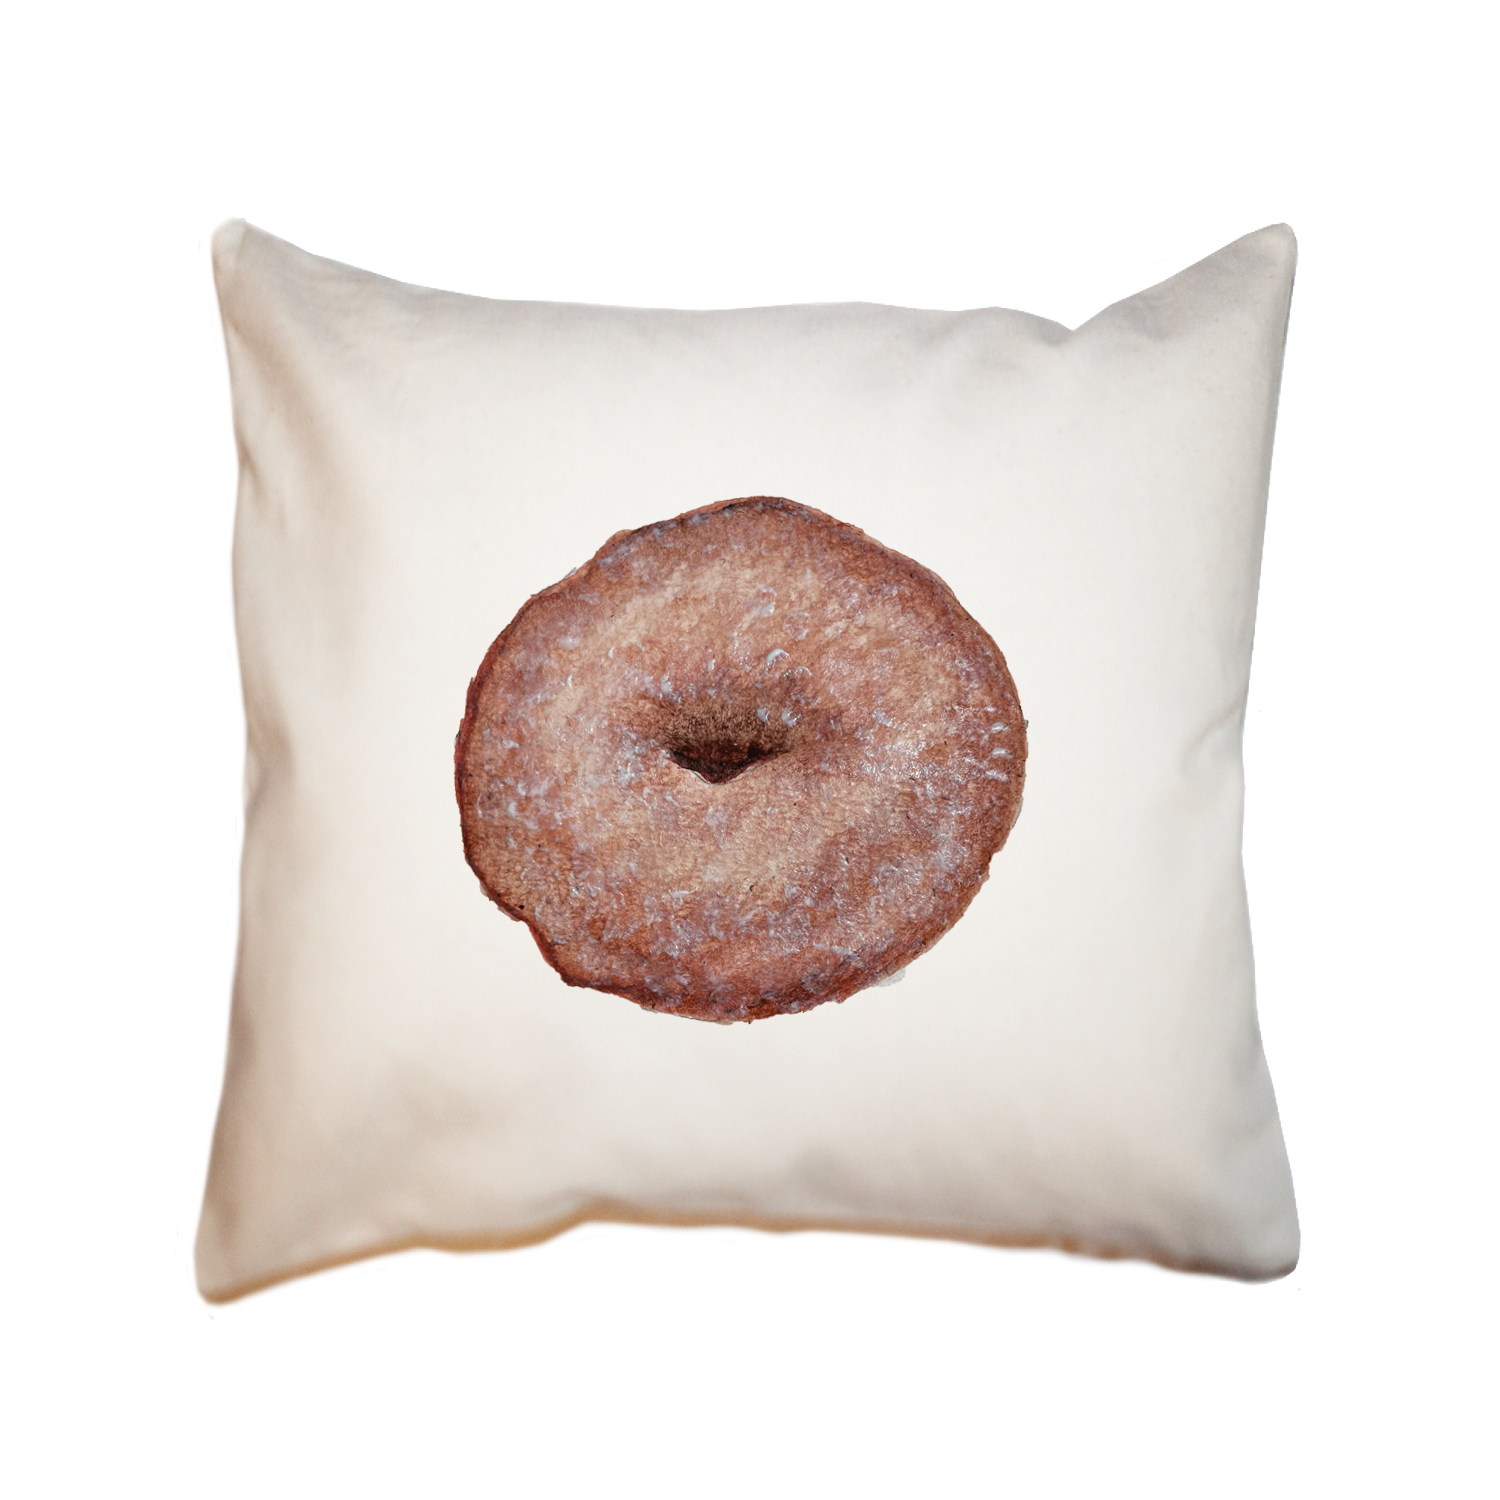 cider donut square pillow